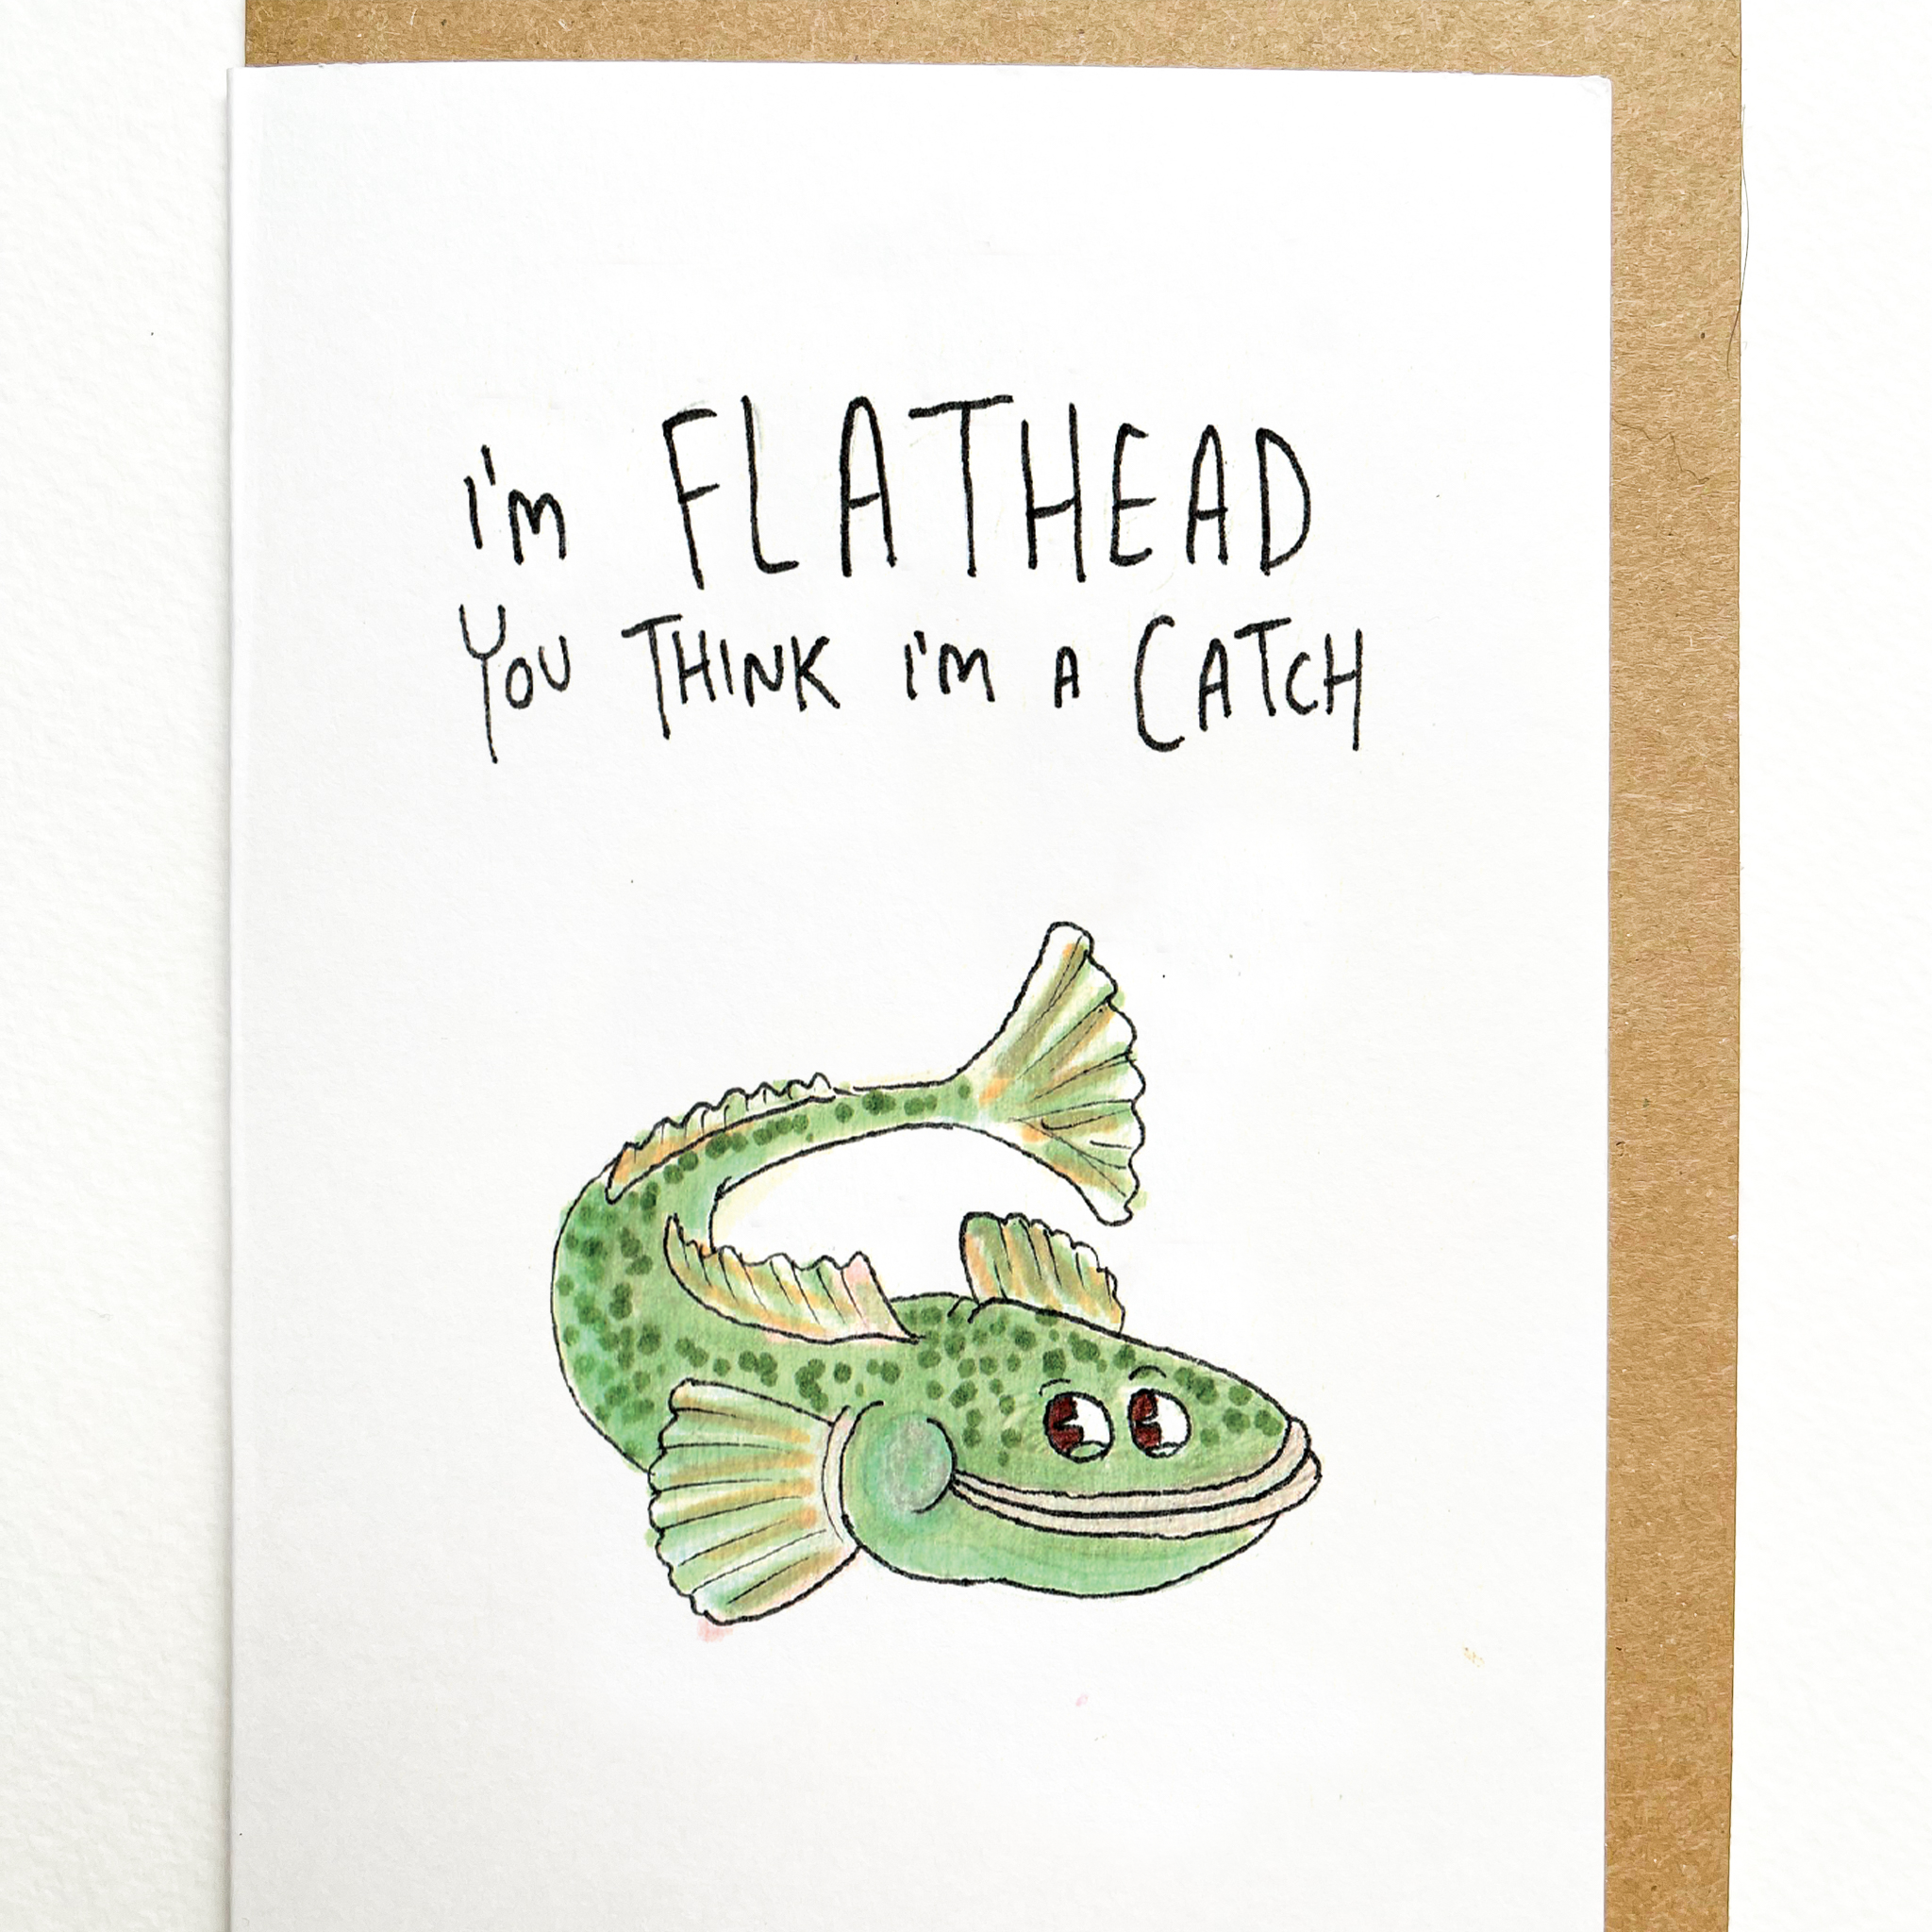 I'm Flathead that you're into Me